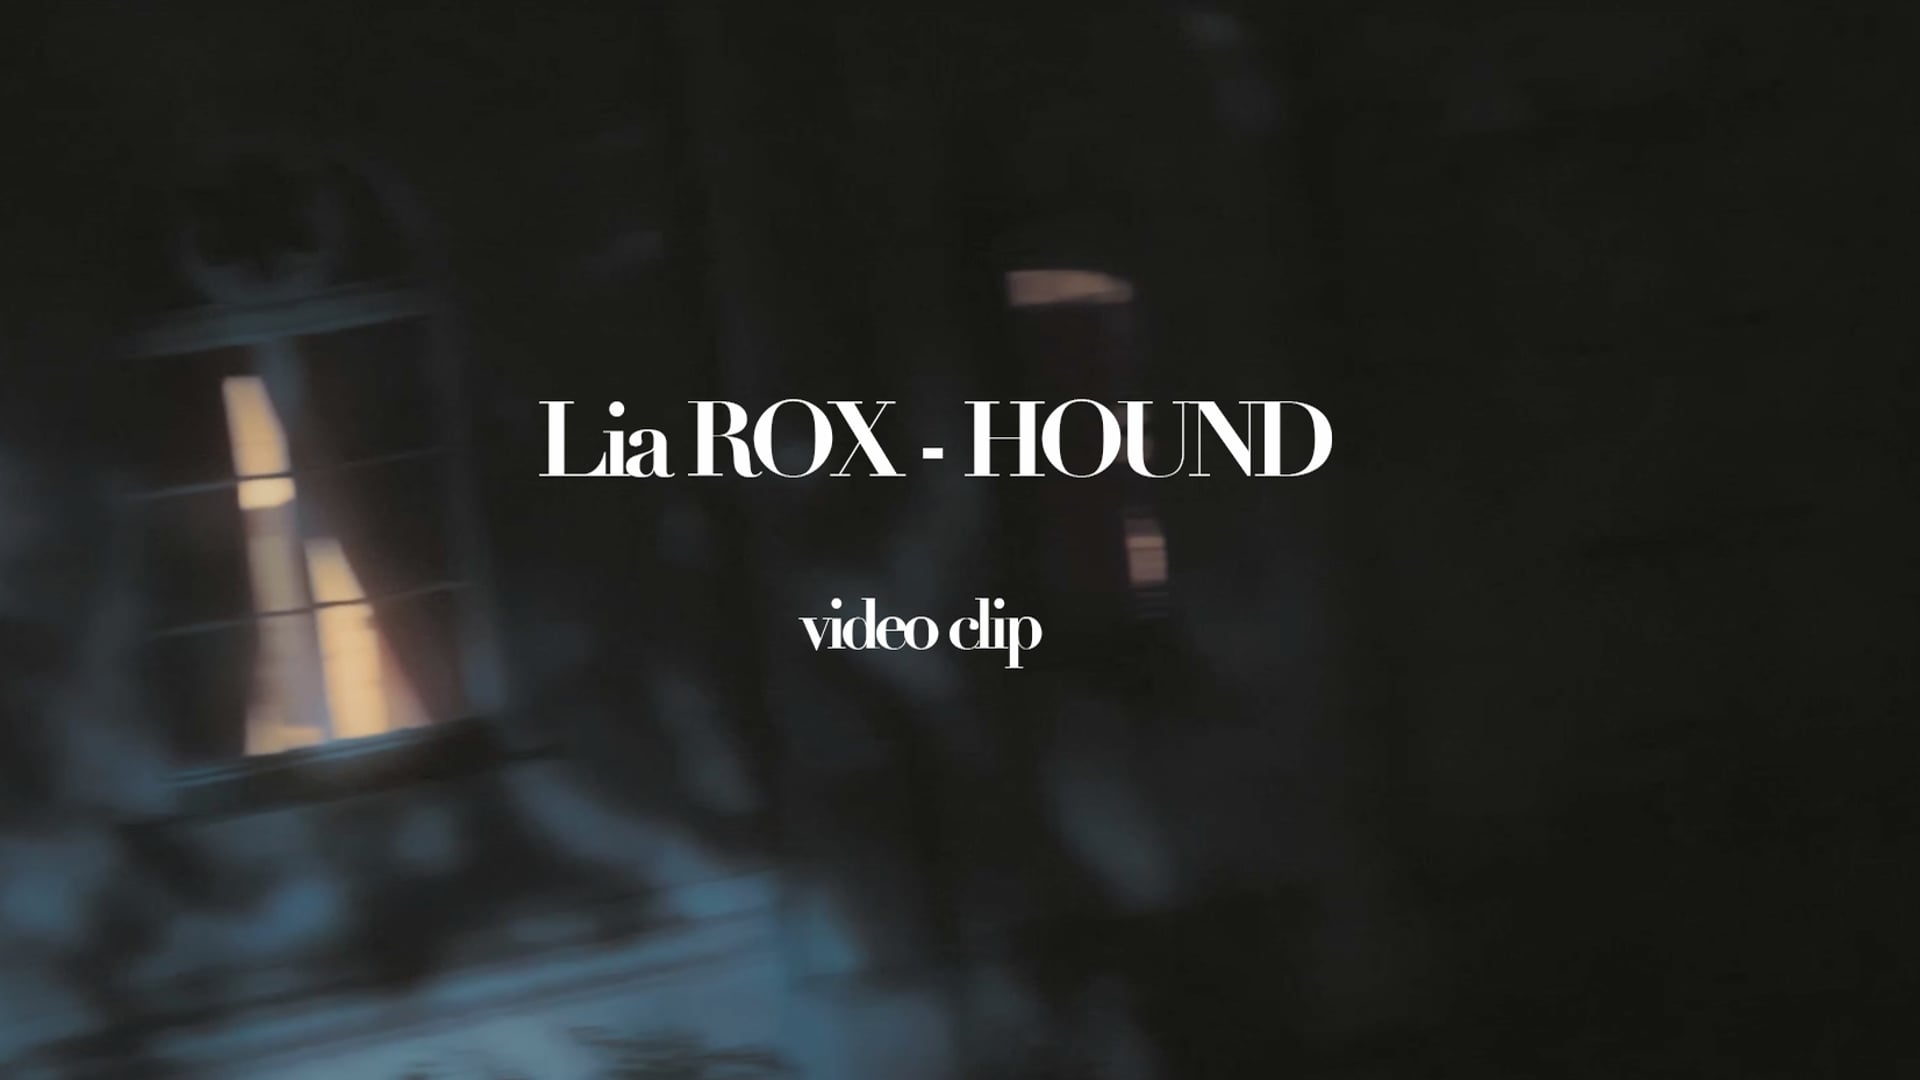 Hound - Lia Rox